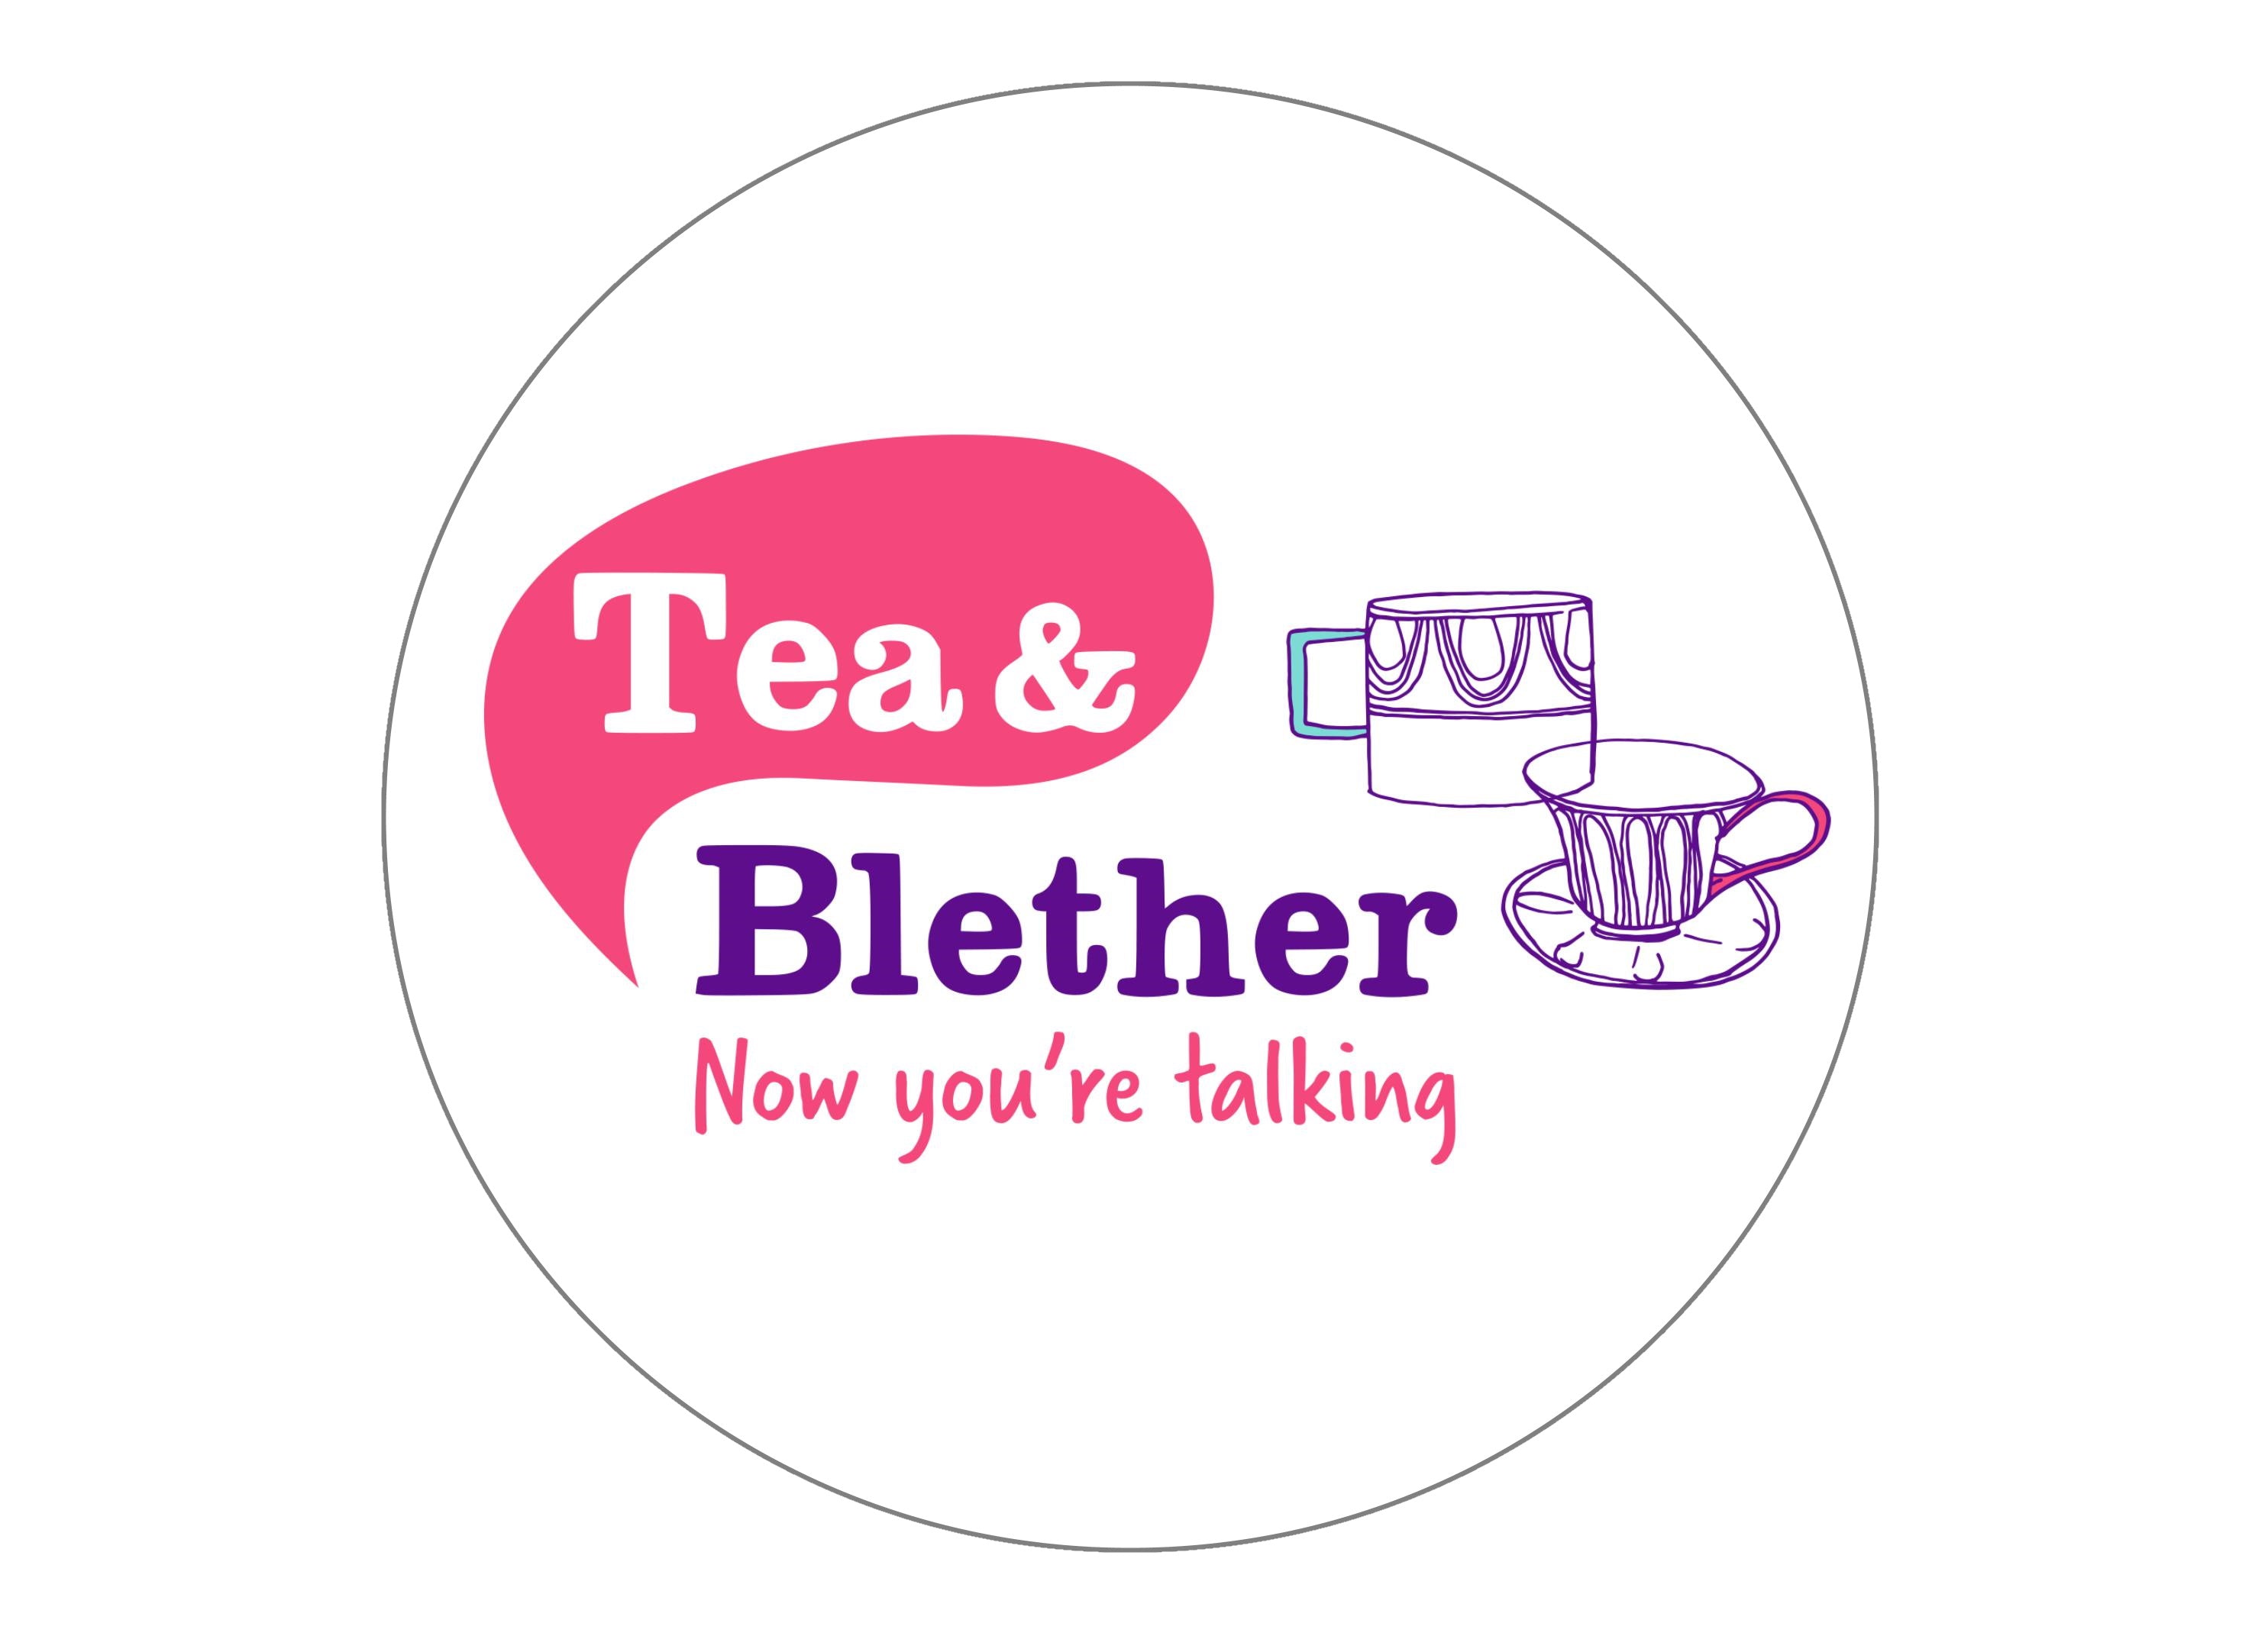 Alzheimer Scotland - Tea & Blether